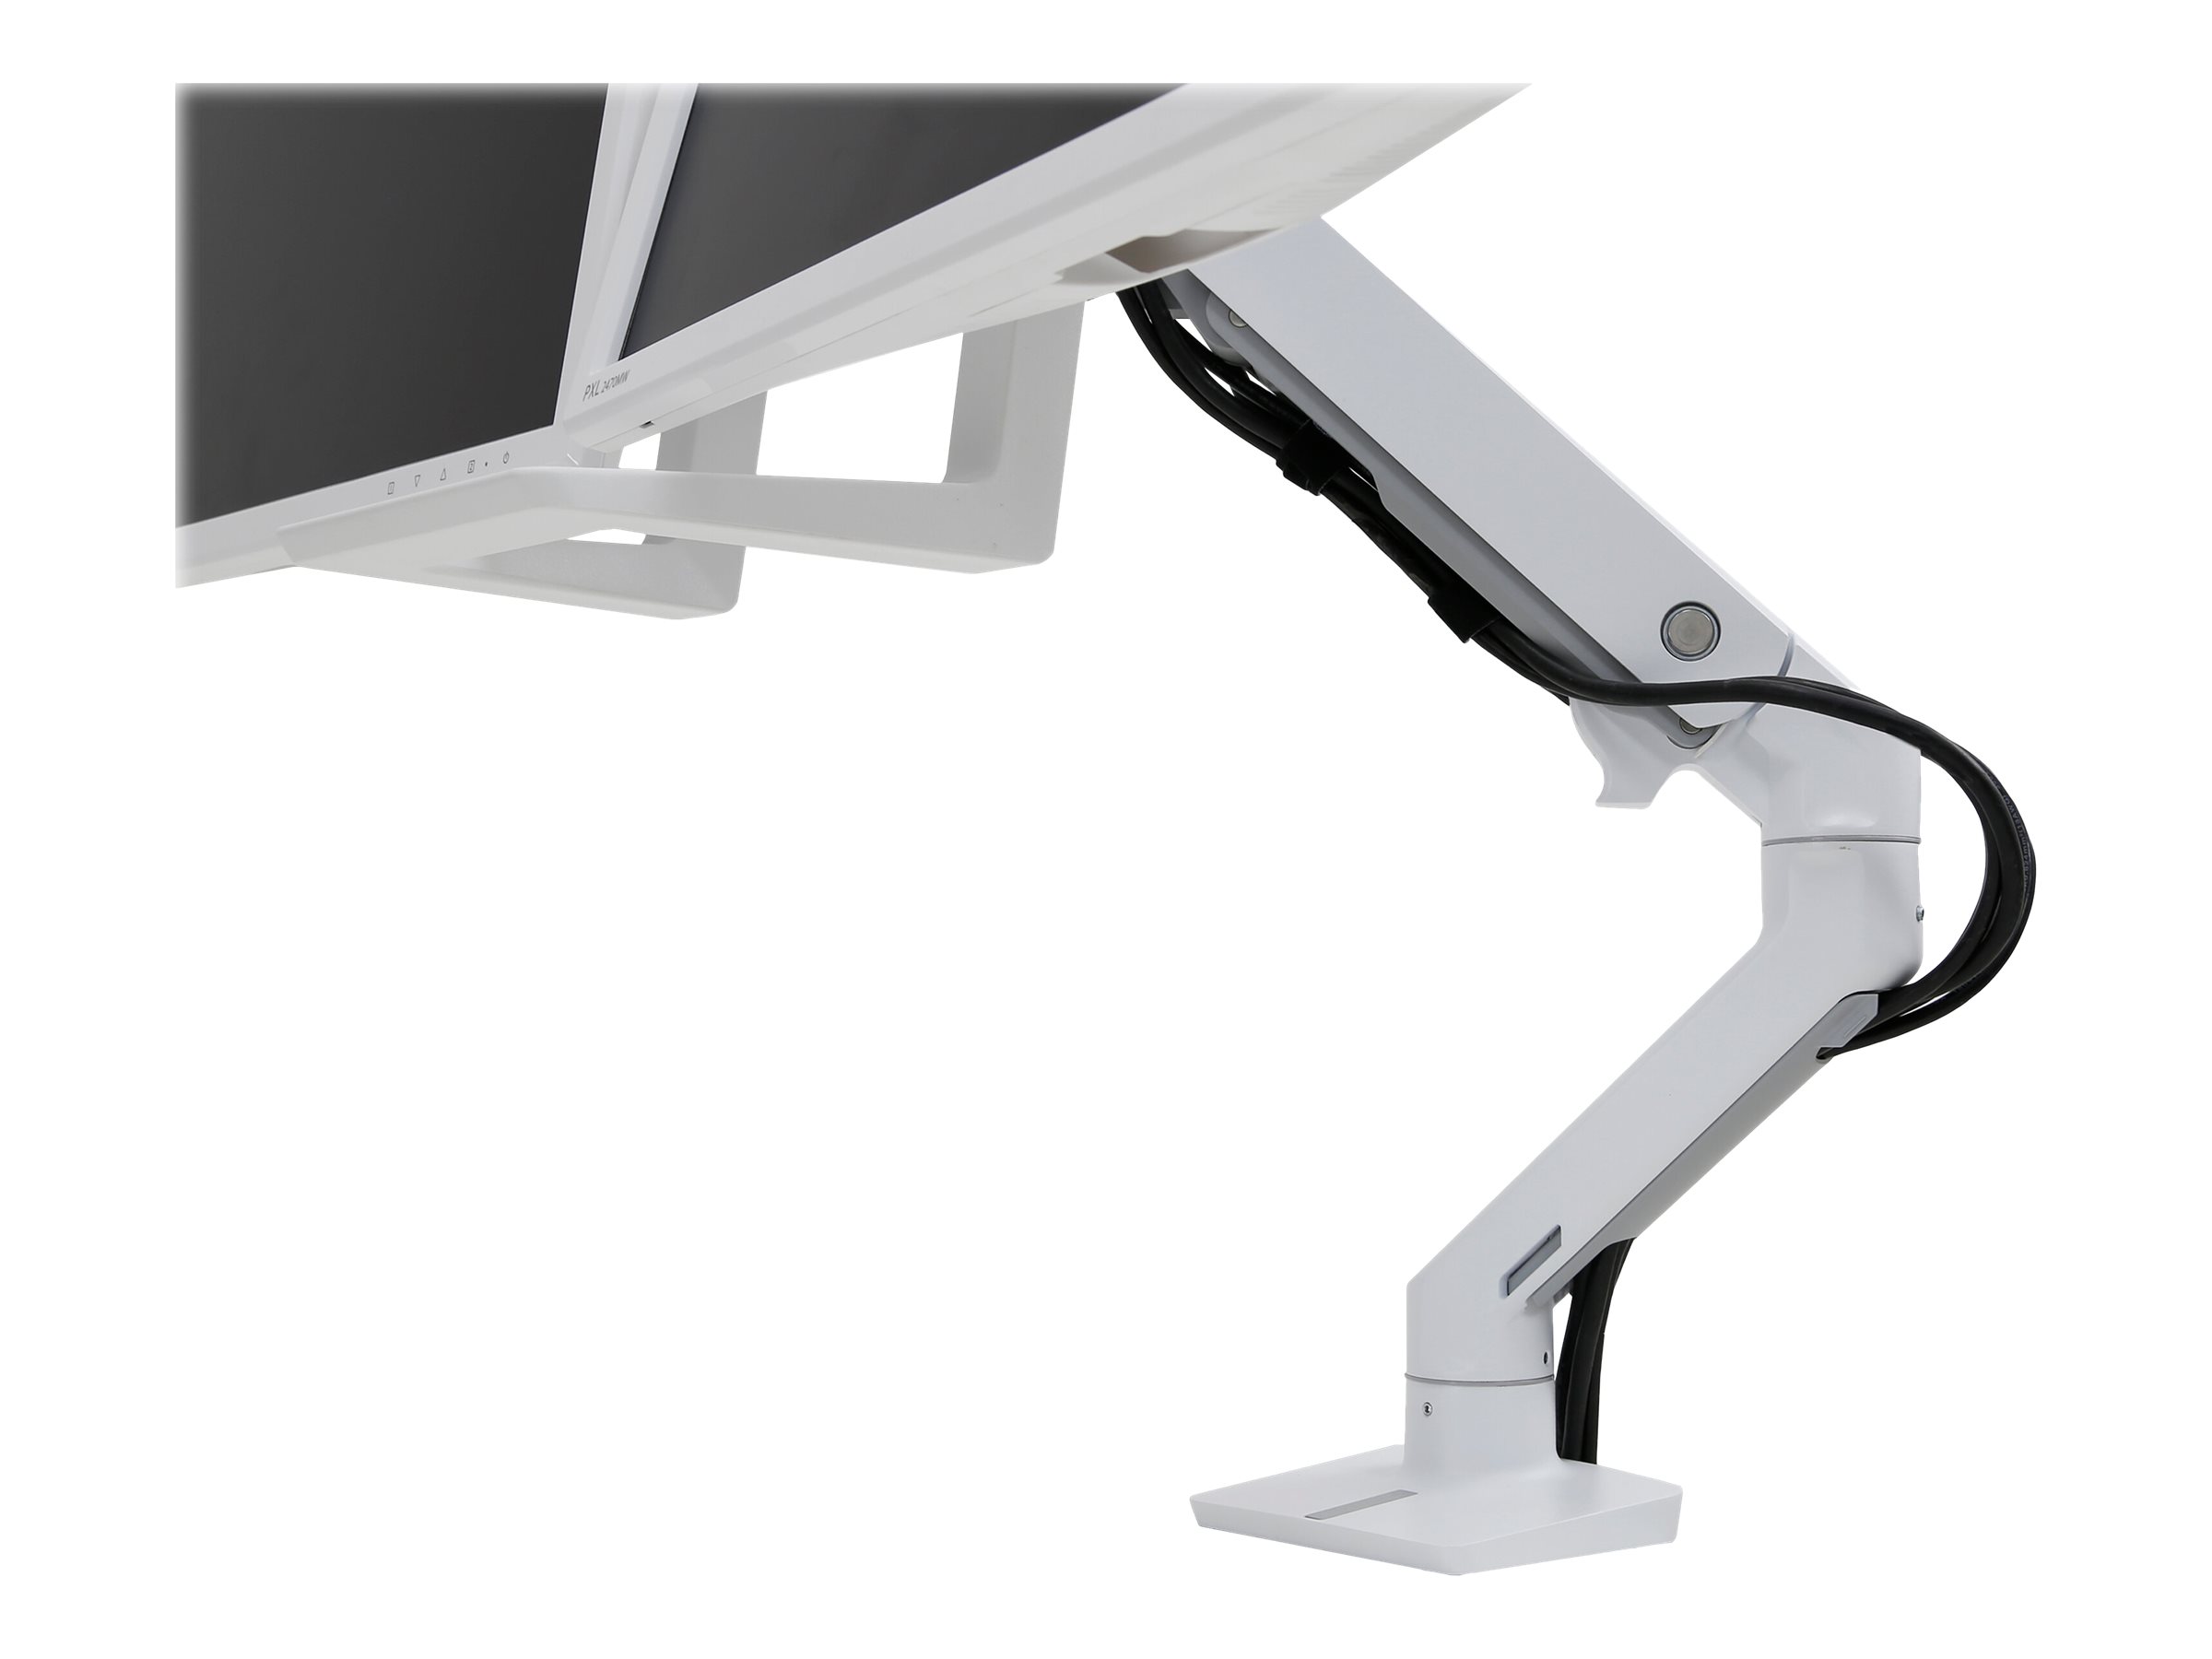 Ergotron 45-476-216 HX Desk Dual Monitor Arm Mounting Kit, Bright White - image 5 of 10